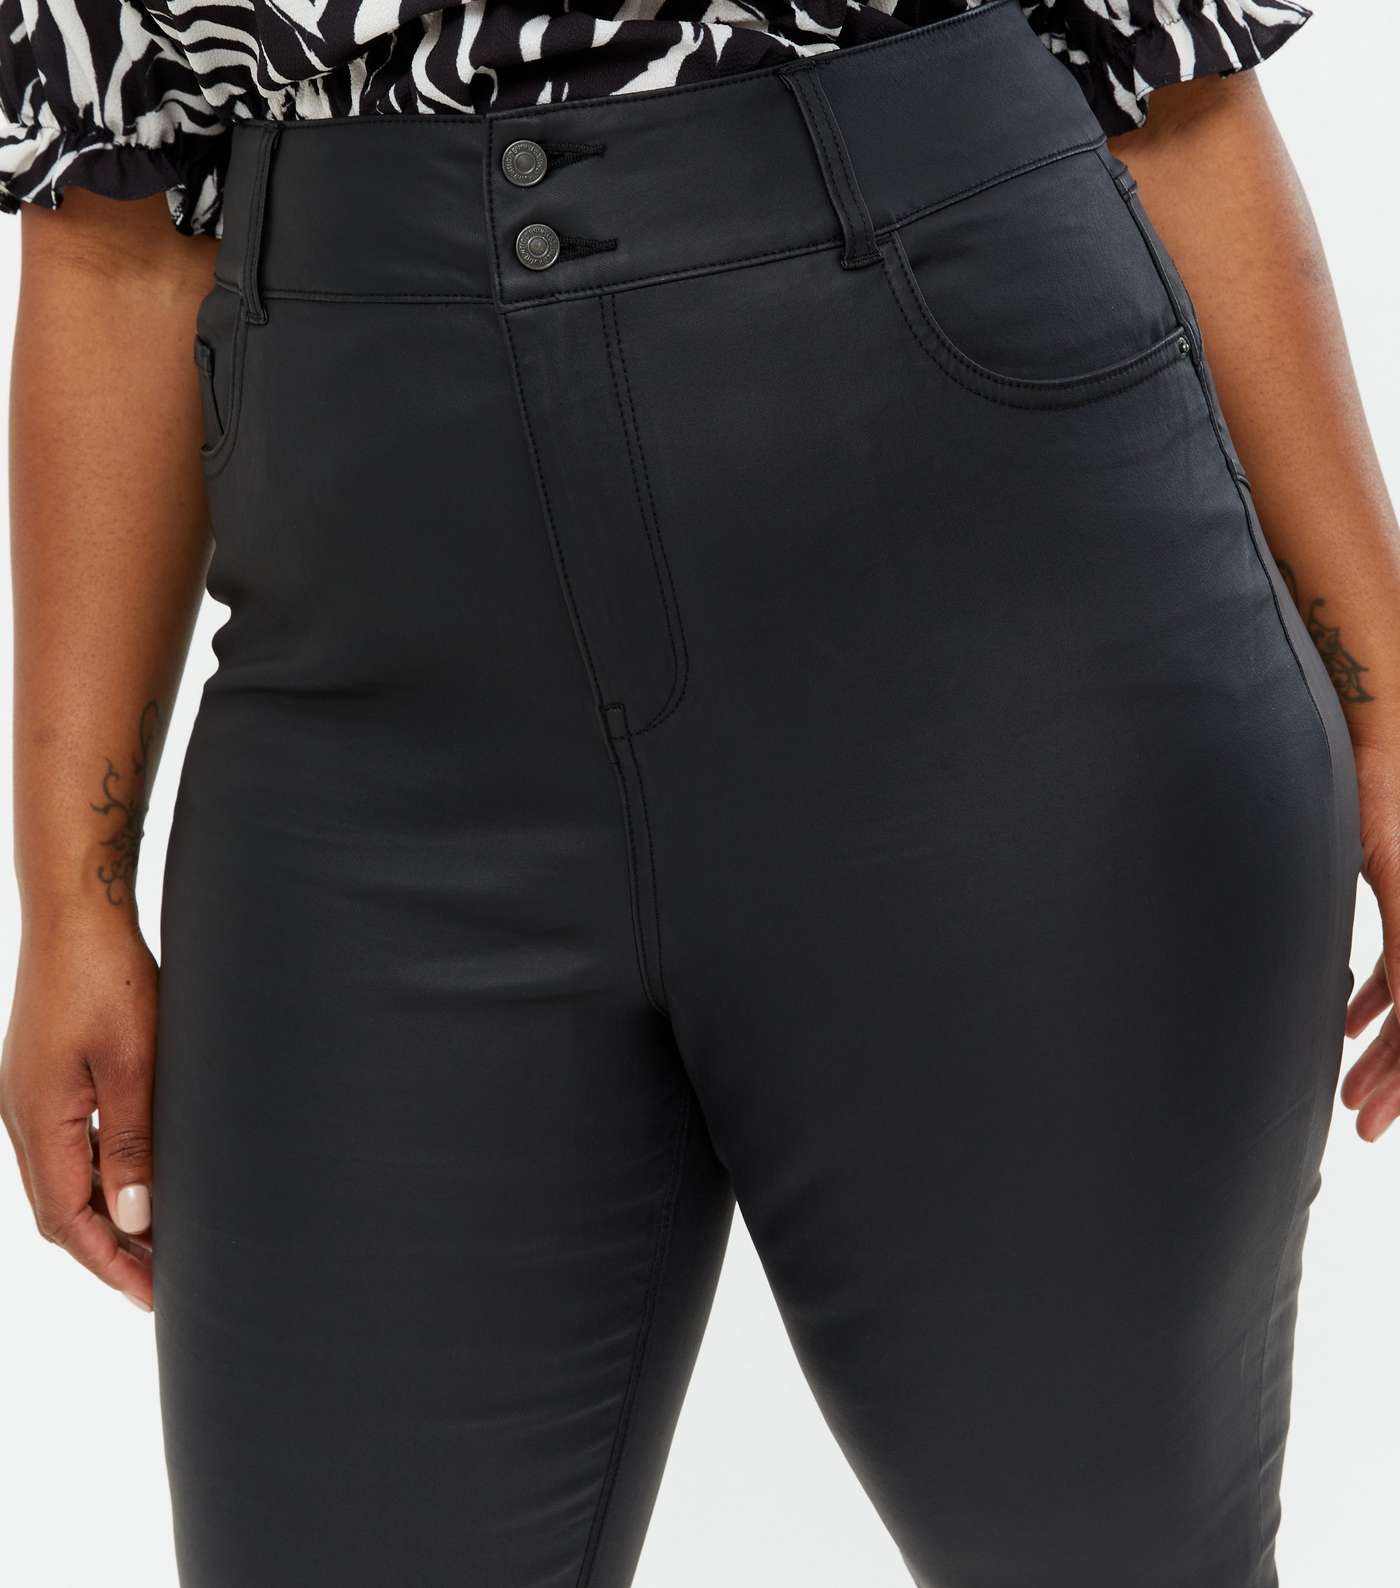 Curves Black Leather-Look Lift & Shape Jenna Skinny Jeans Image 3